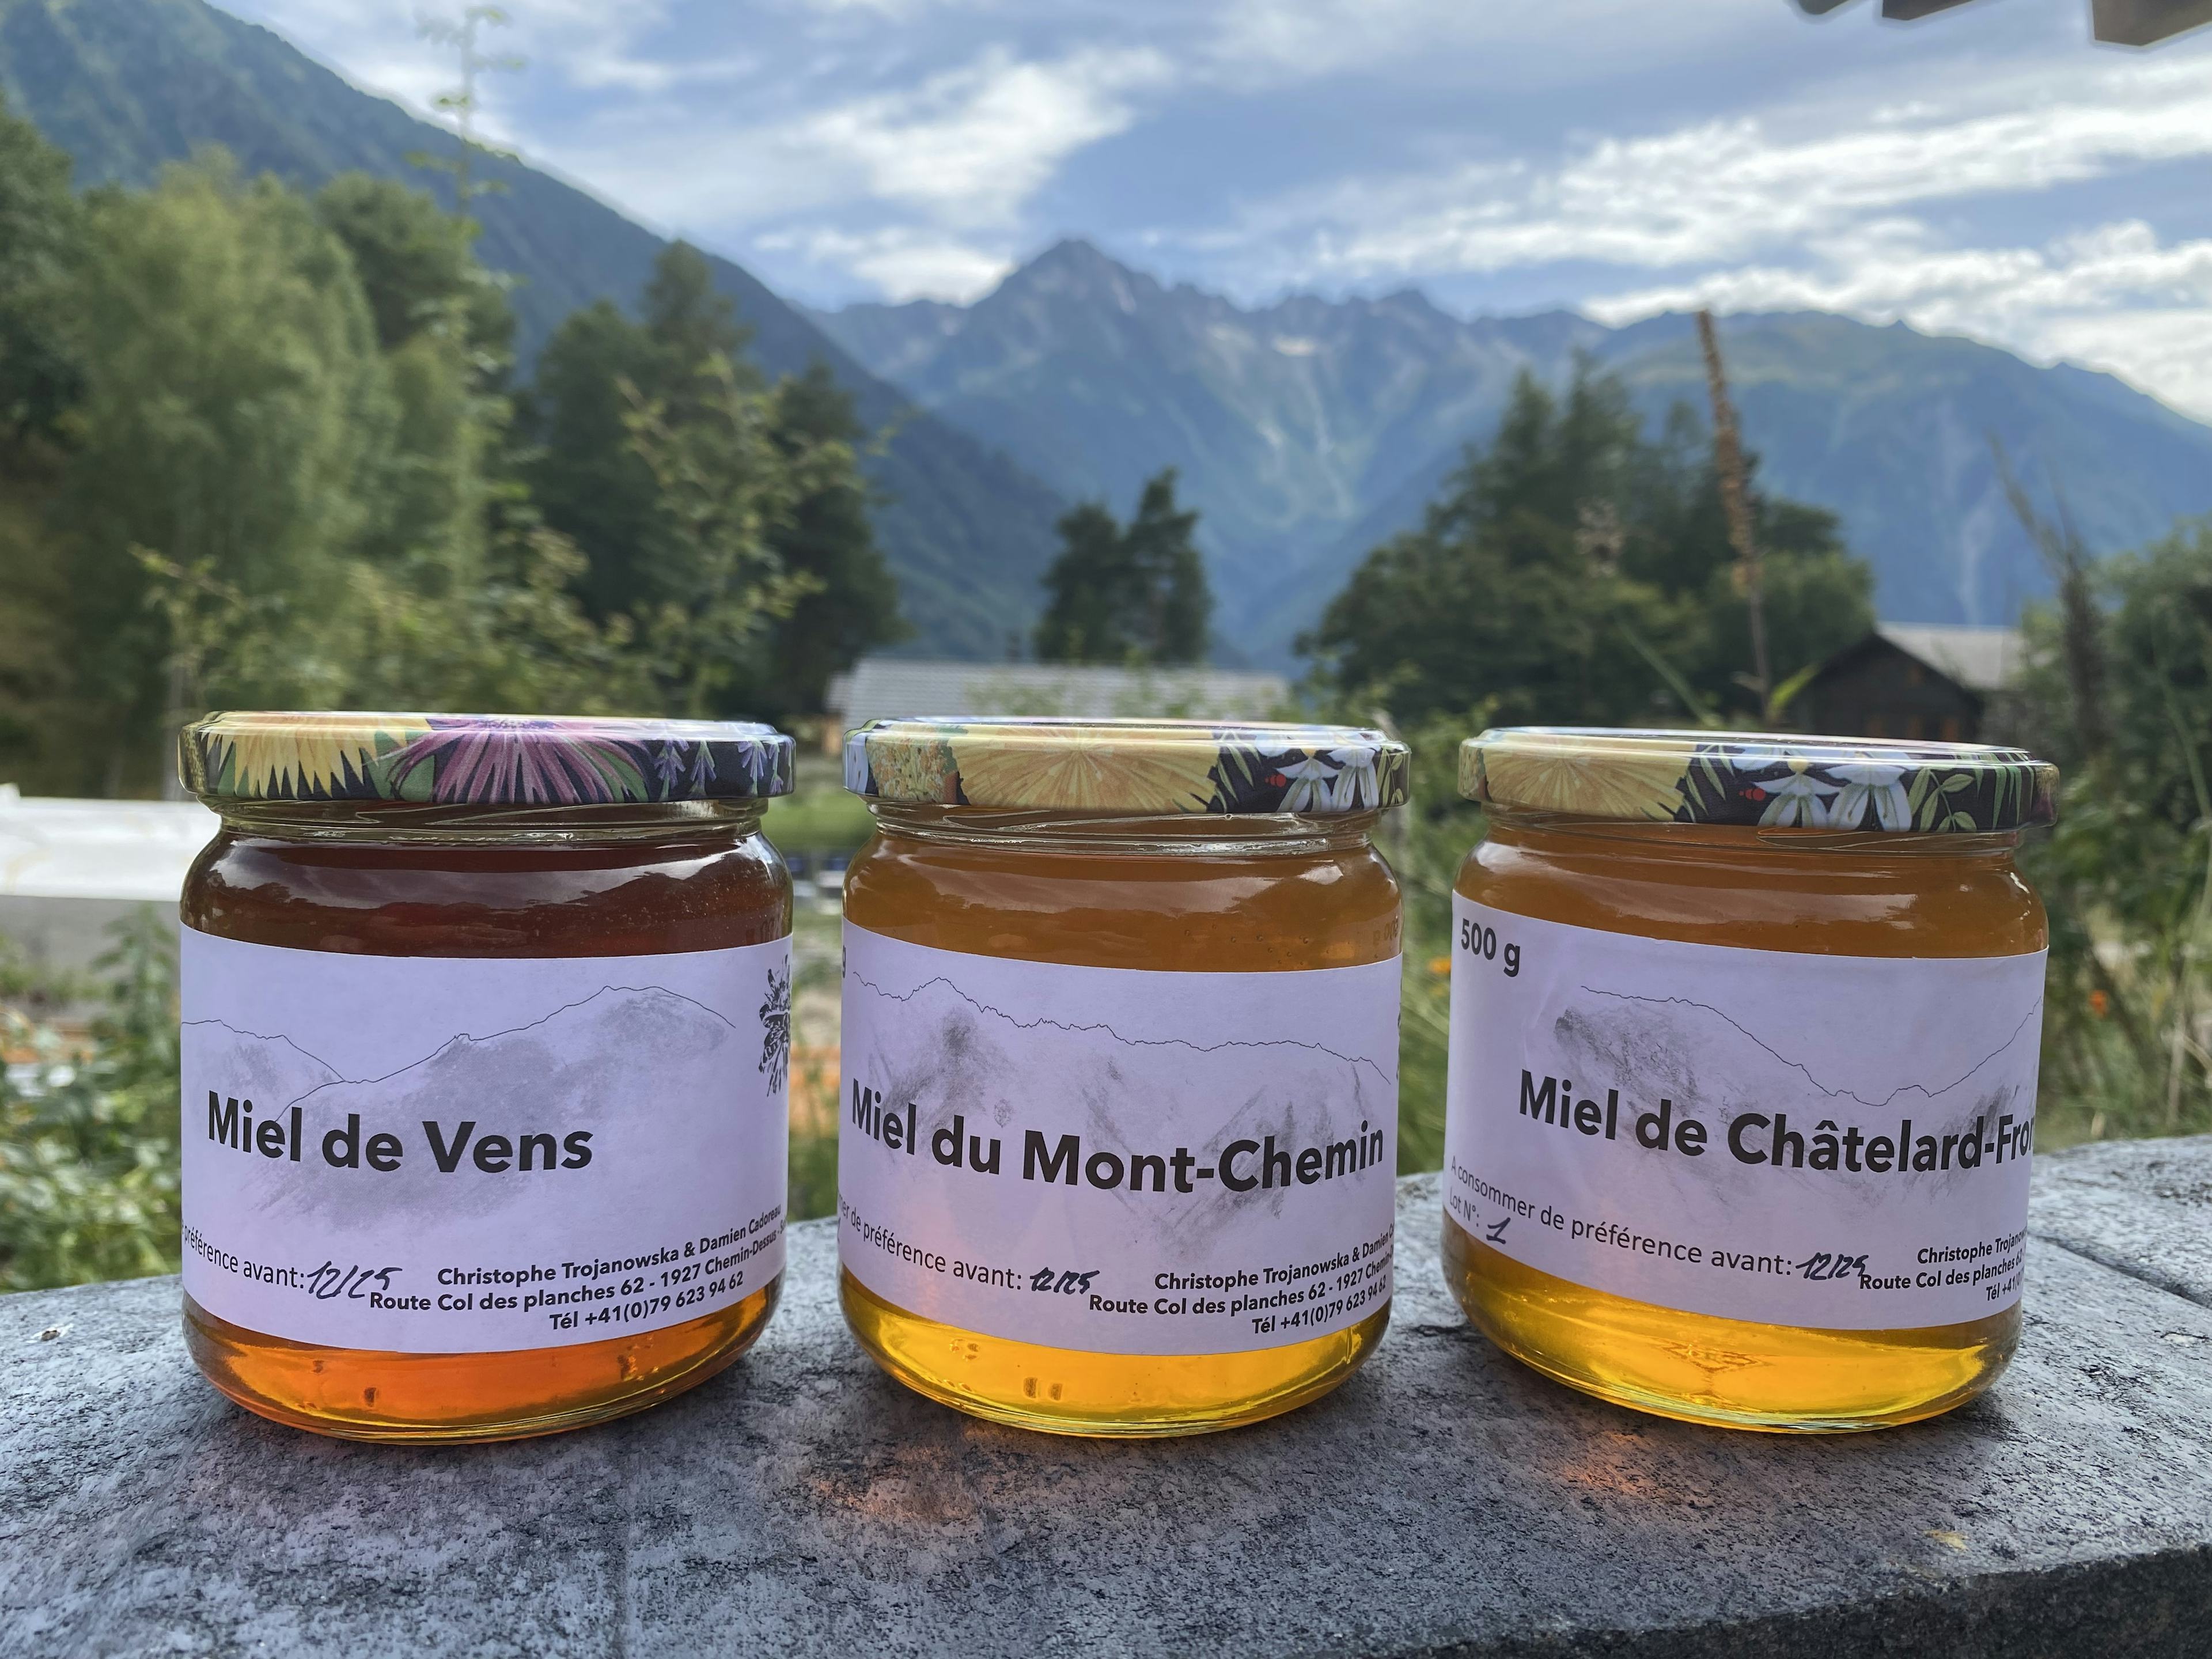 Miel de Vens, artisanal product for direct sale in Switzerland